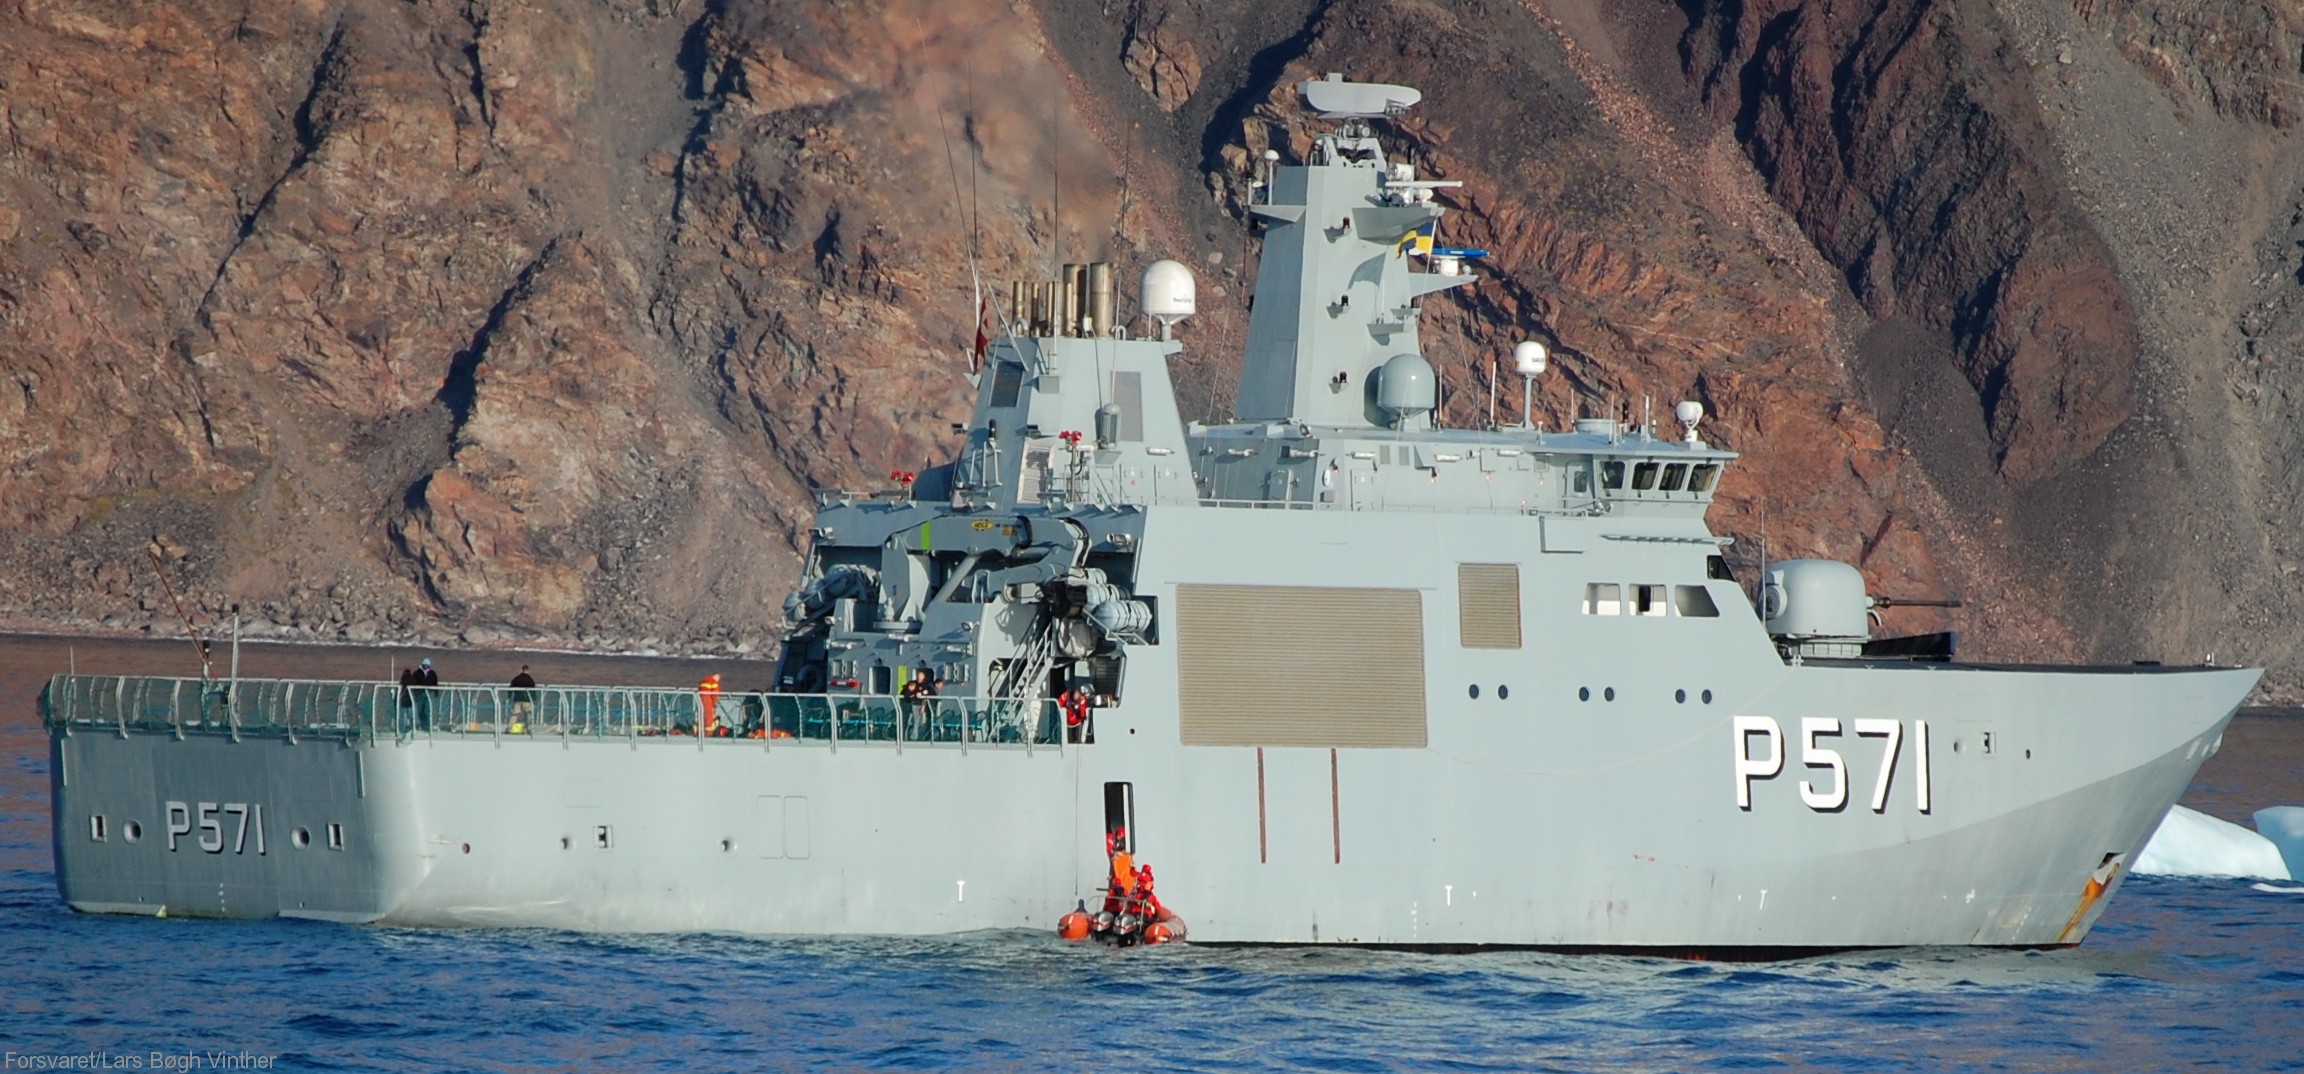 p-571 hdms ejnar mikkelsen knud rasmussen class offshore patrol vessel opv royal danish navy inspektionsfartøj 32